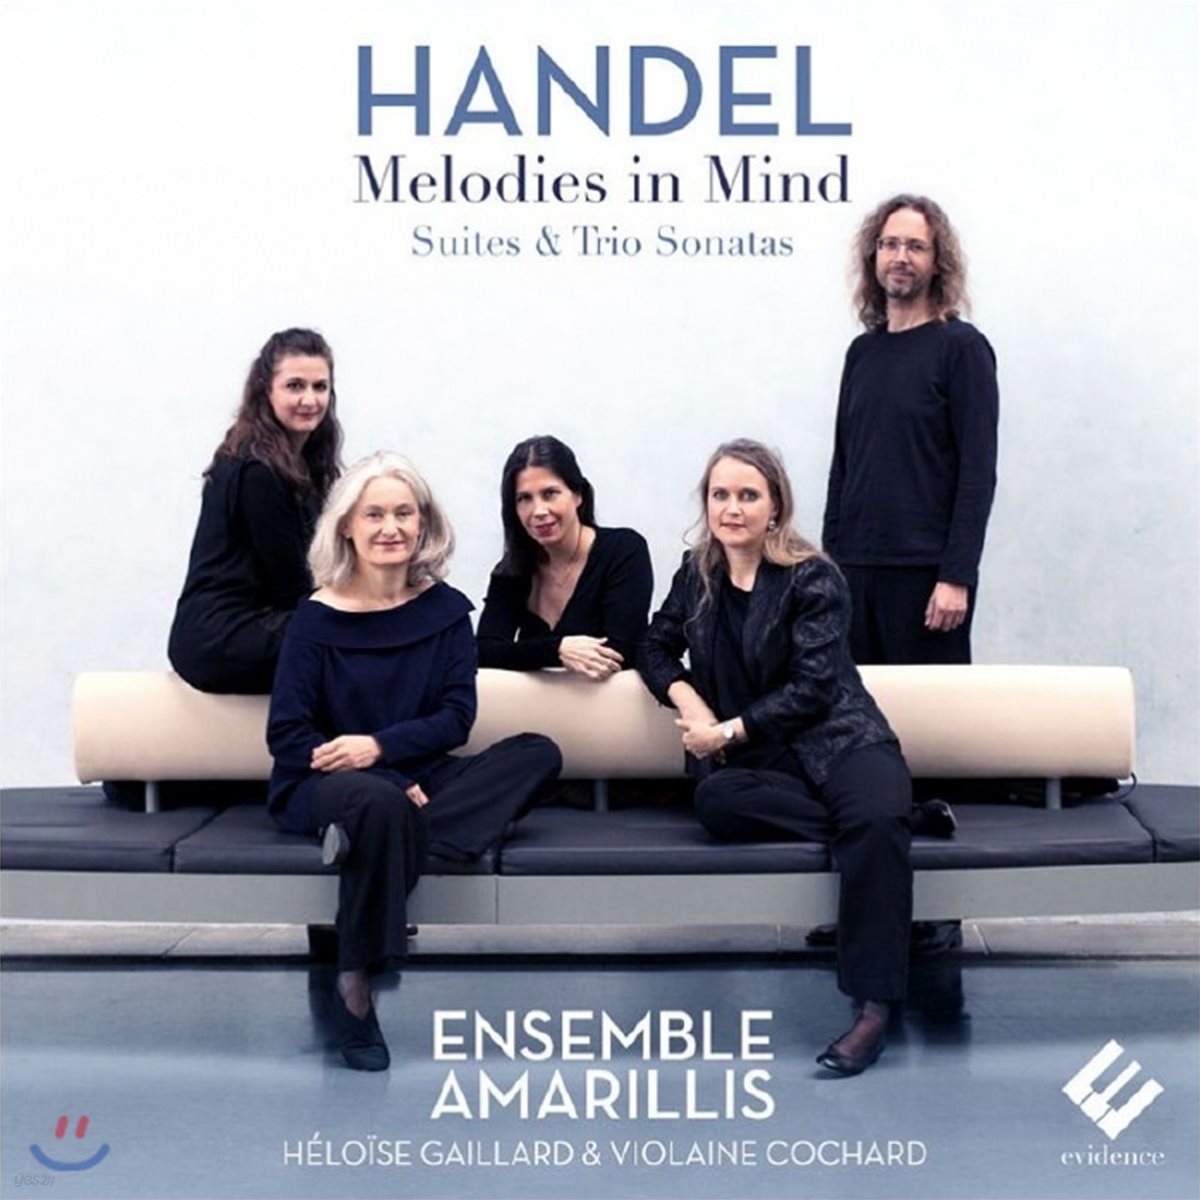 Ensemble Amarillis 헨델: 모음곡, 트리오 소나타 작품집 (Handel: Melodies in Mind)